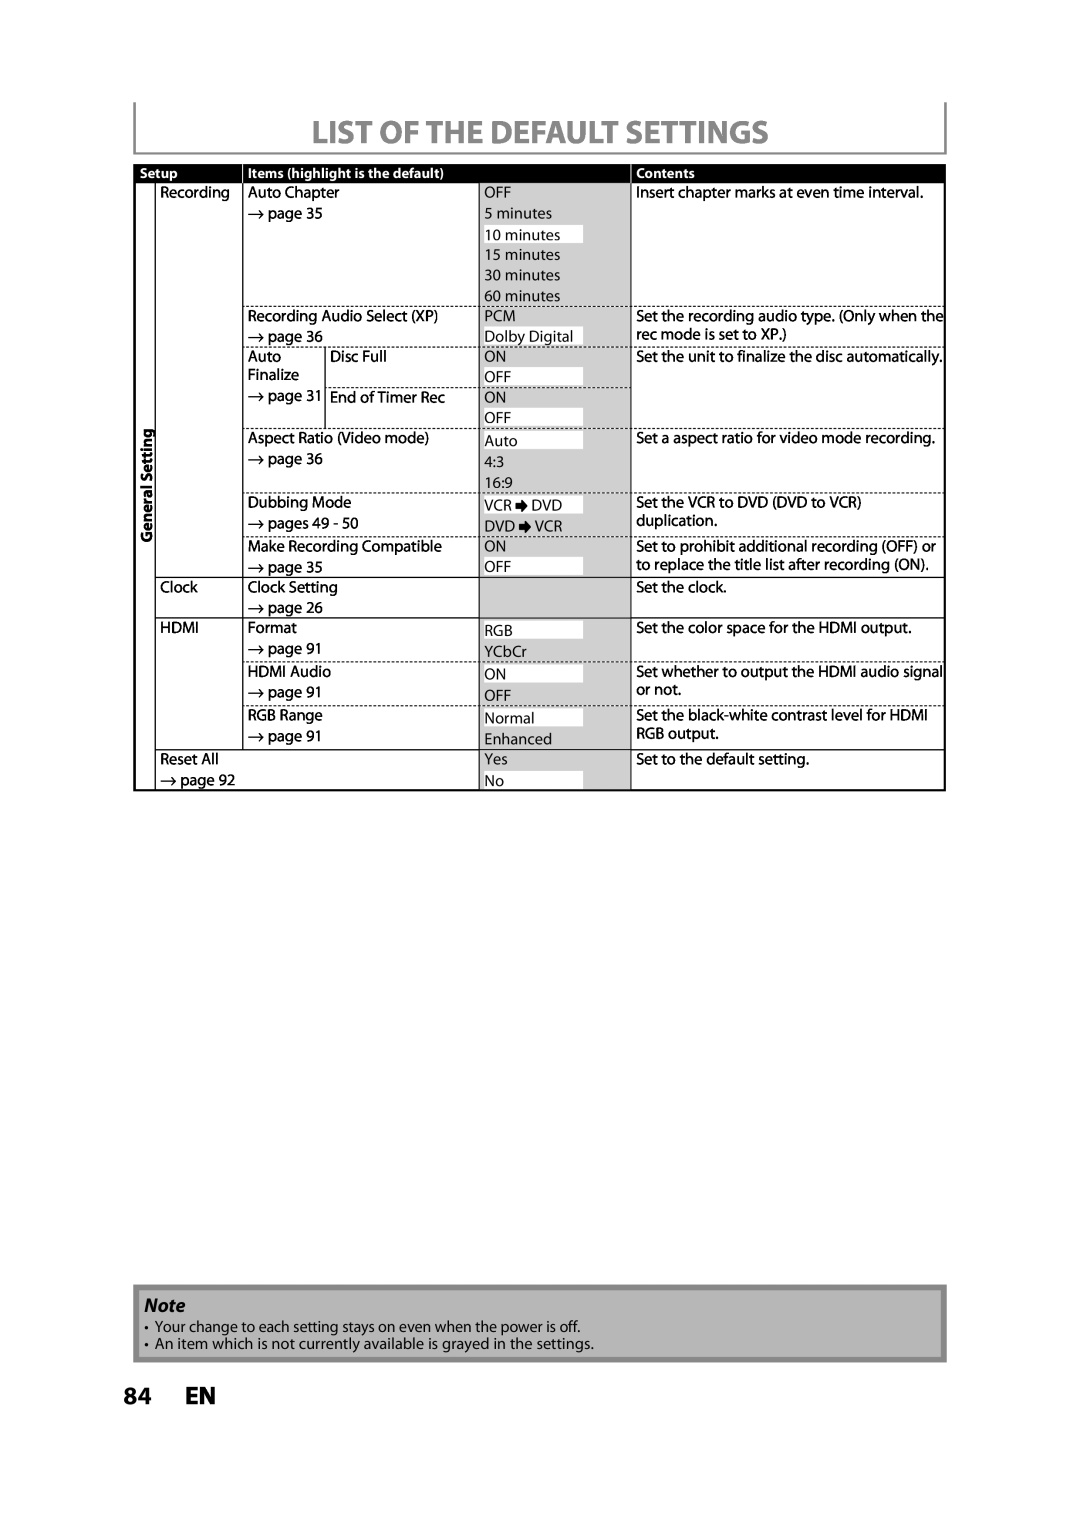 Toshiba DVR620KC owner manual List Of The Default Settings, 84 EN 